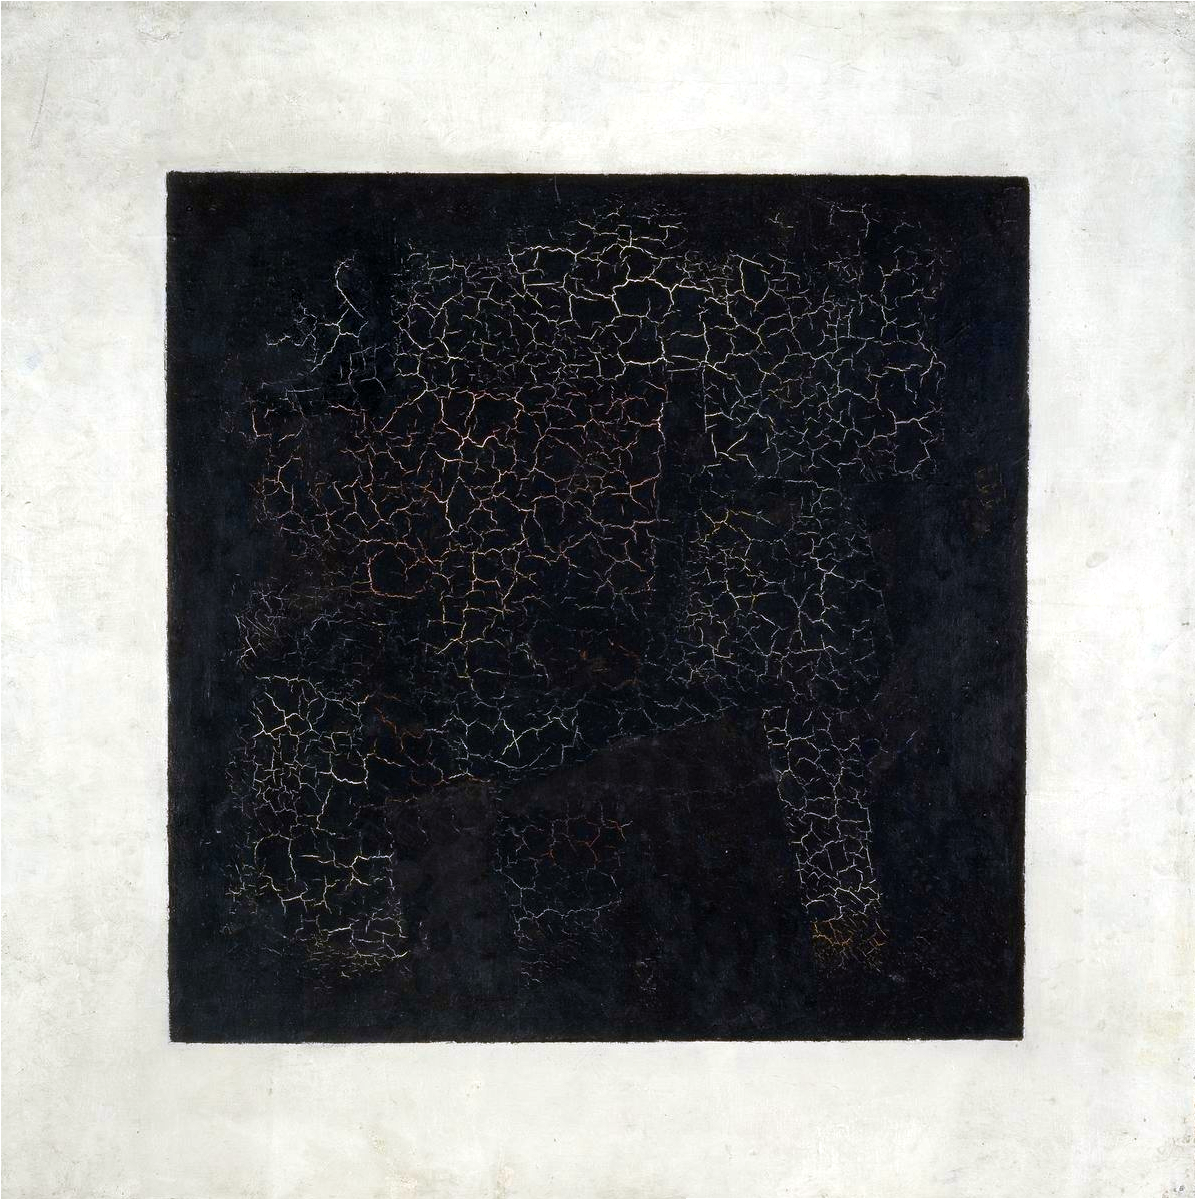 Black Square / Das schwarze Quadrat	Kazimir Malevich